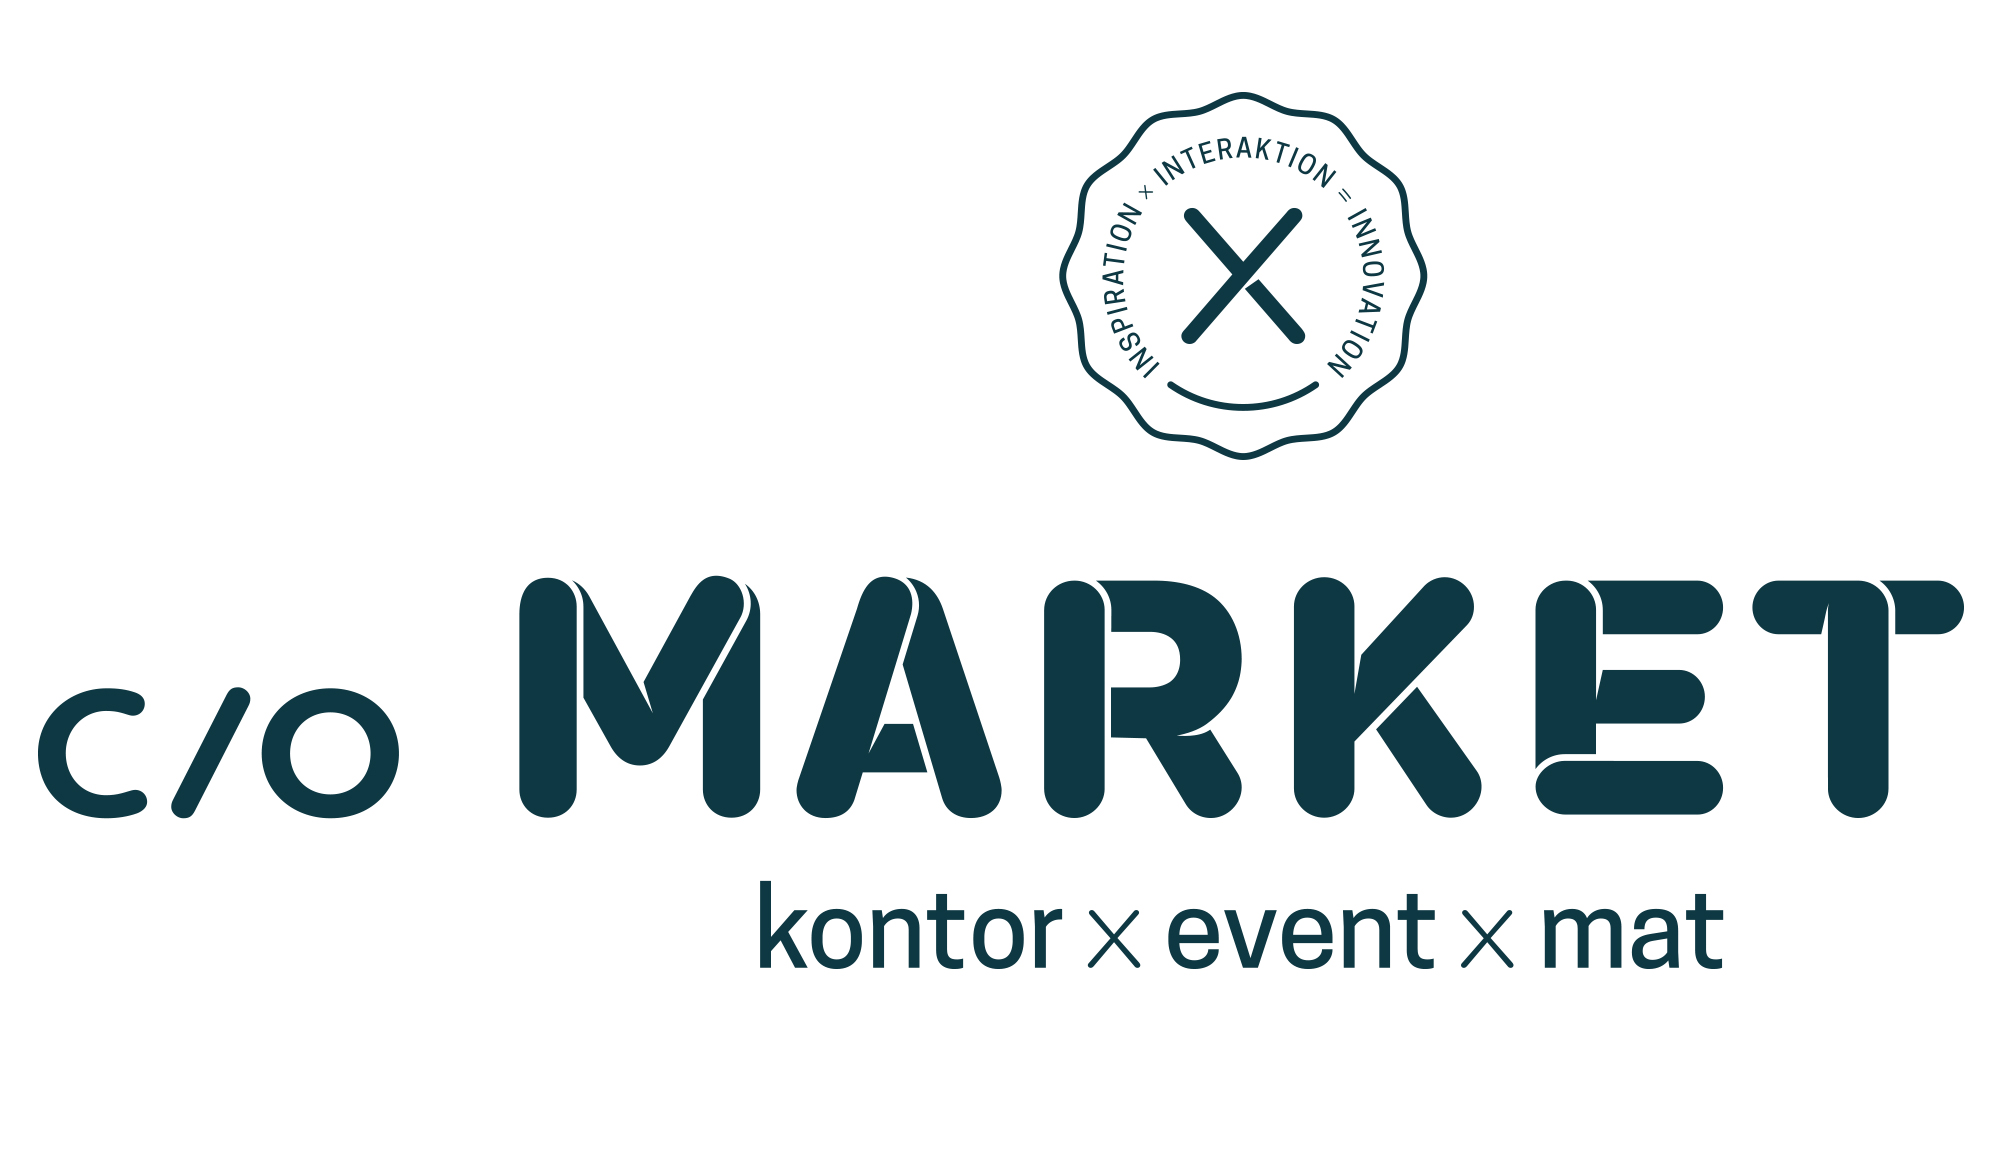 c/o MARKET INSPIRATION x INTERAKTION = INNOVATION kontor x event x mat